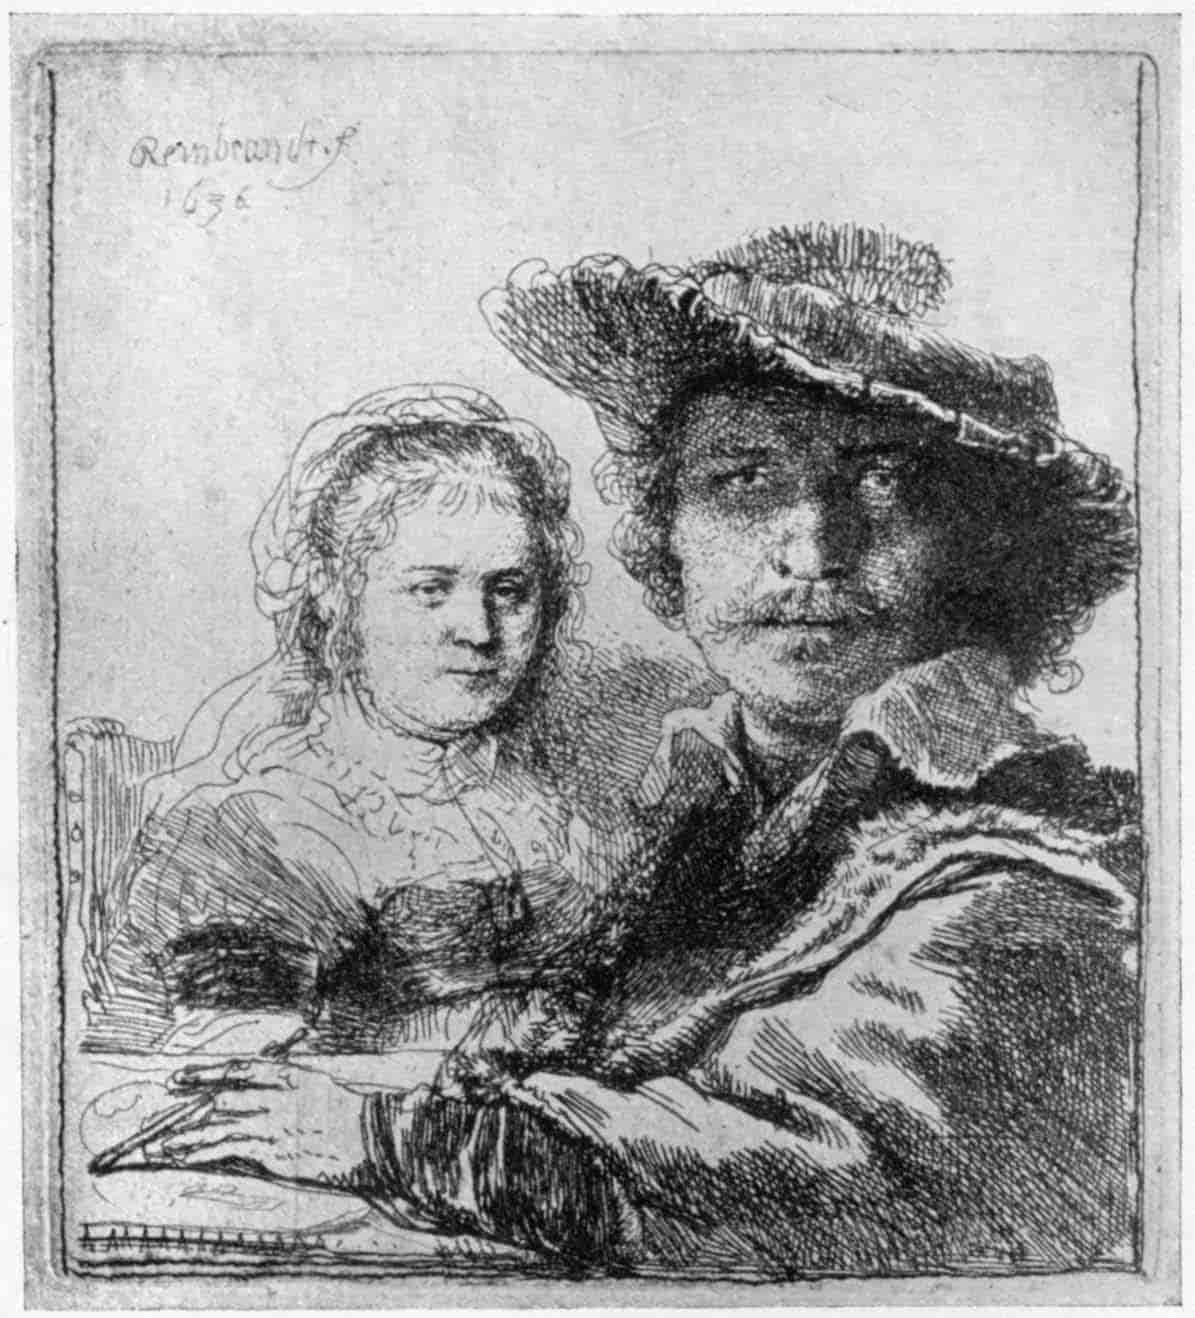 144, II. Rembrandt and his Wife, Saskia, 1636, B. 19